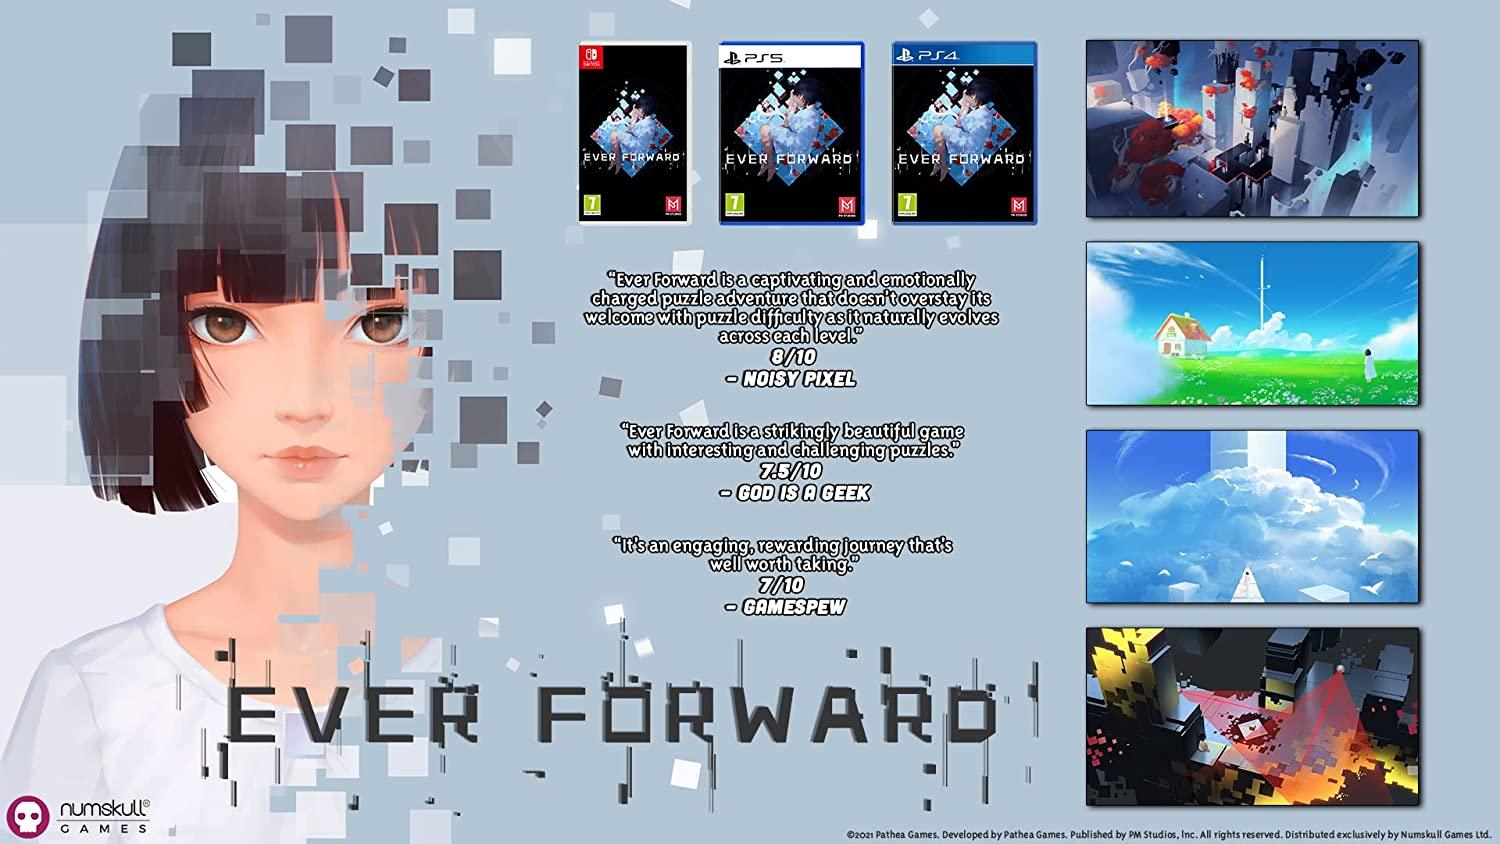 Ever Forward (Nintendo Switch) - GameStore.mt | Powered by Flutisat